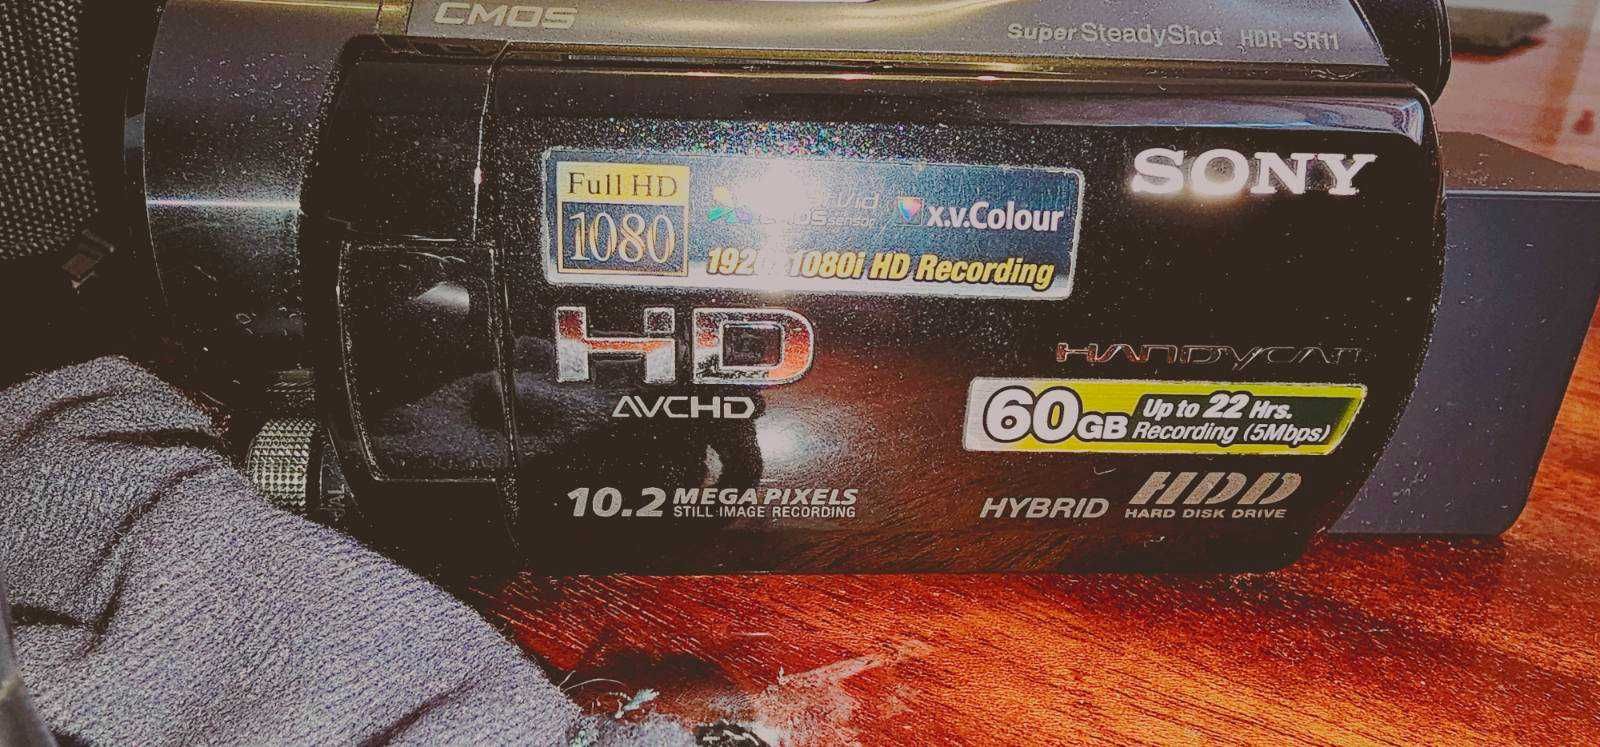 Sony hdr-sr11 handycam 60 GB